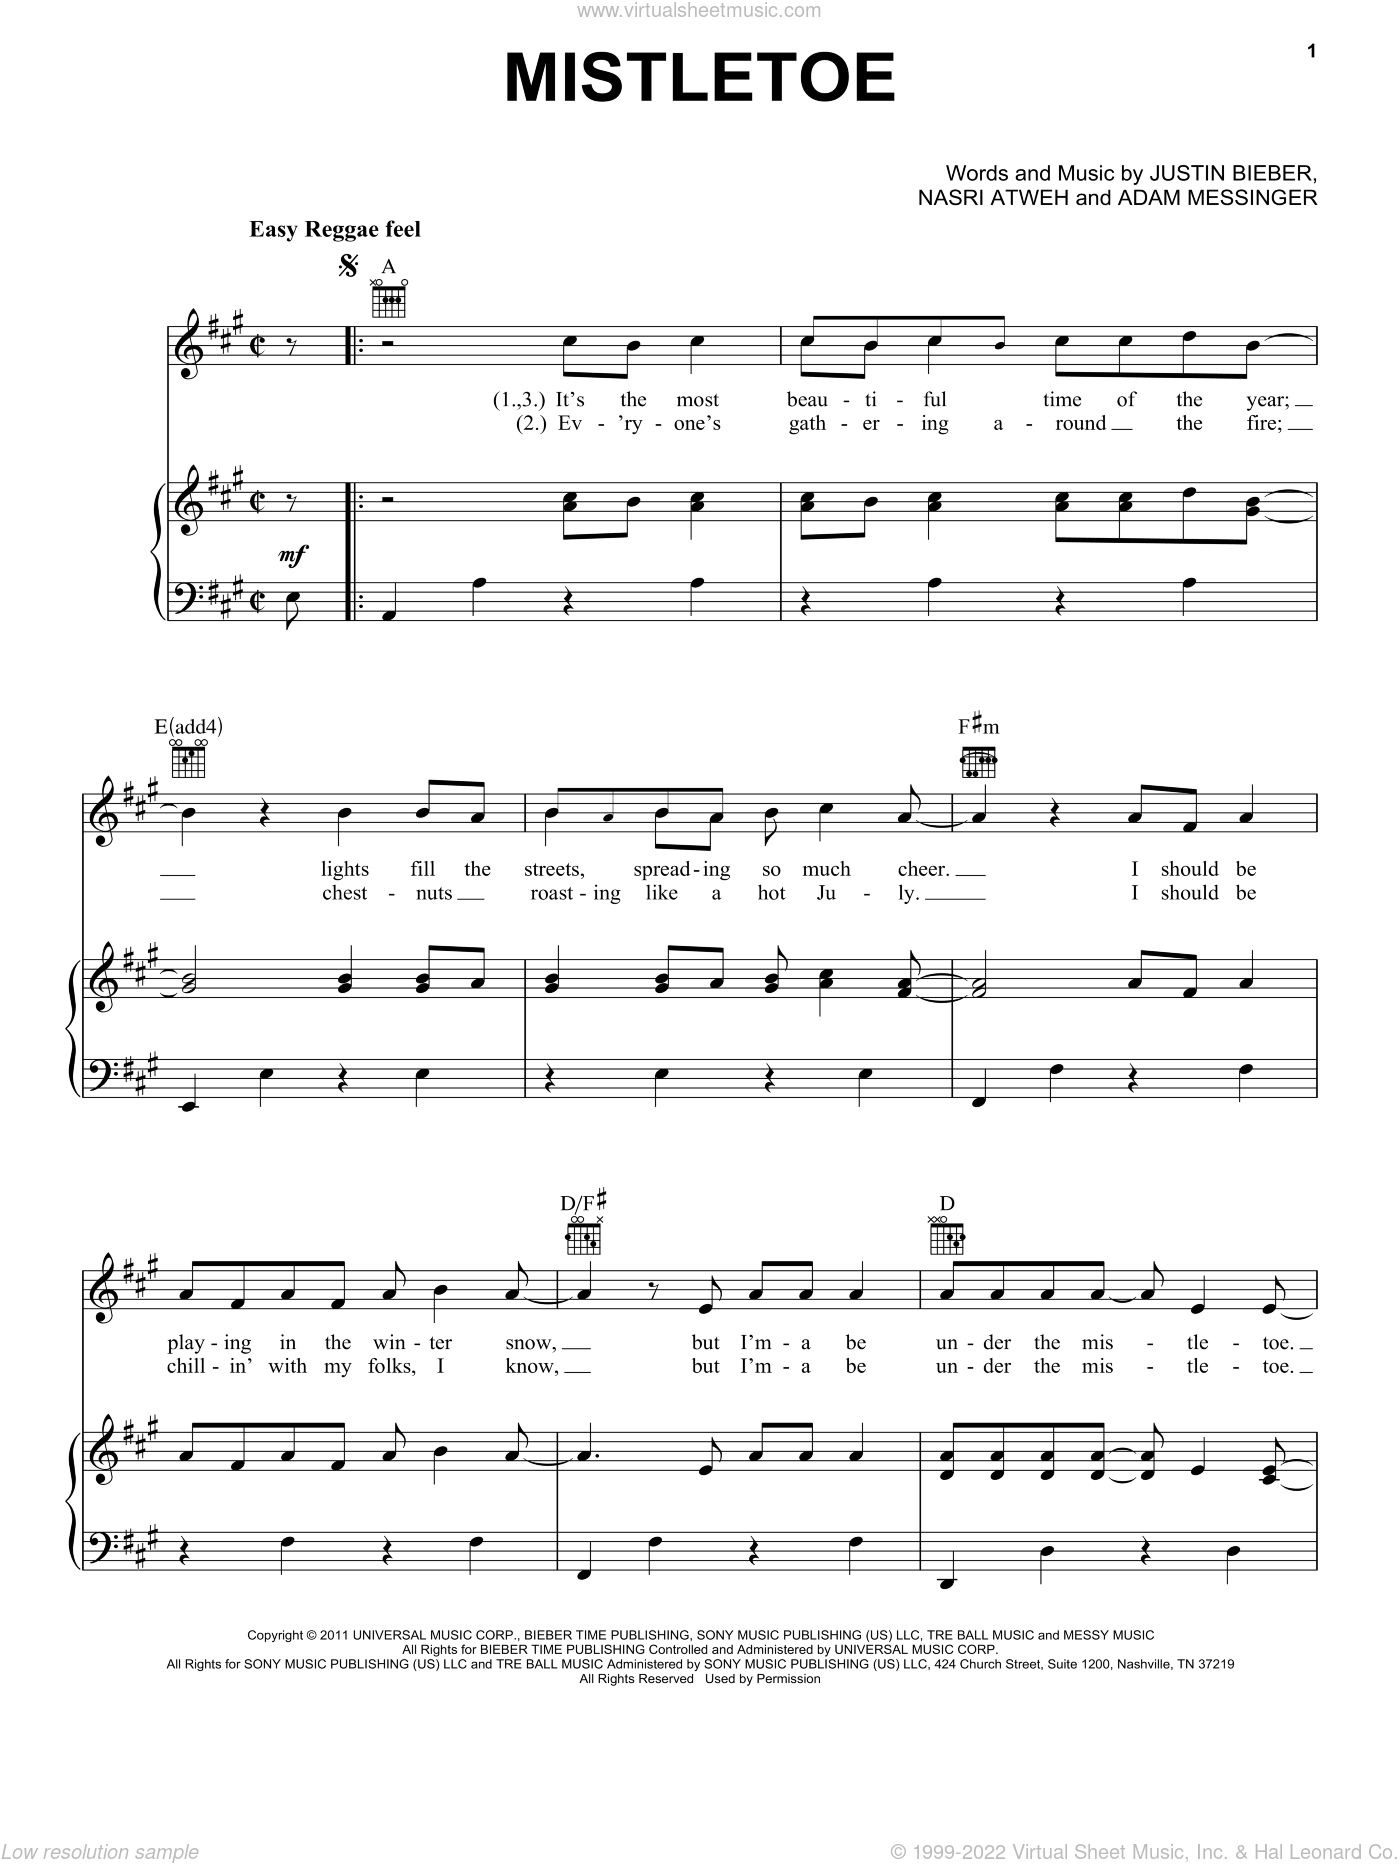 Bieber - Mistletoe sheet music for voice, piano or guitar PDF